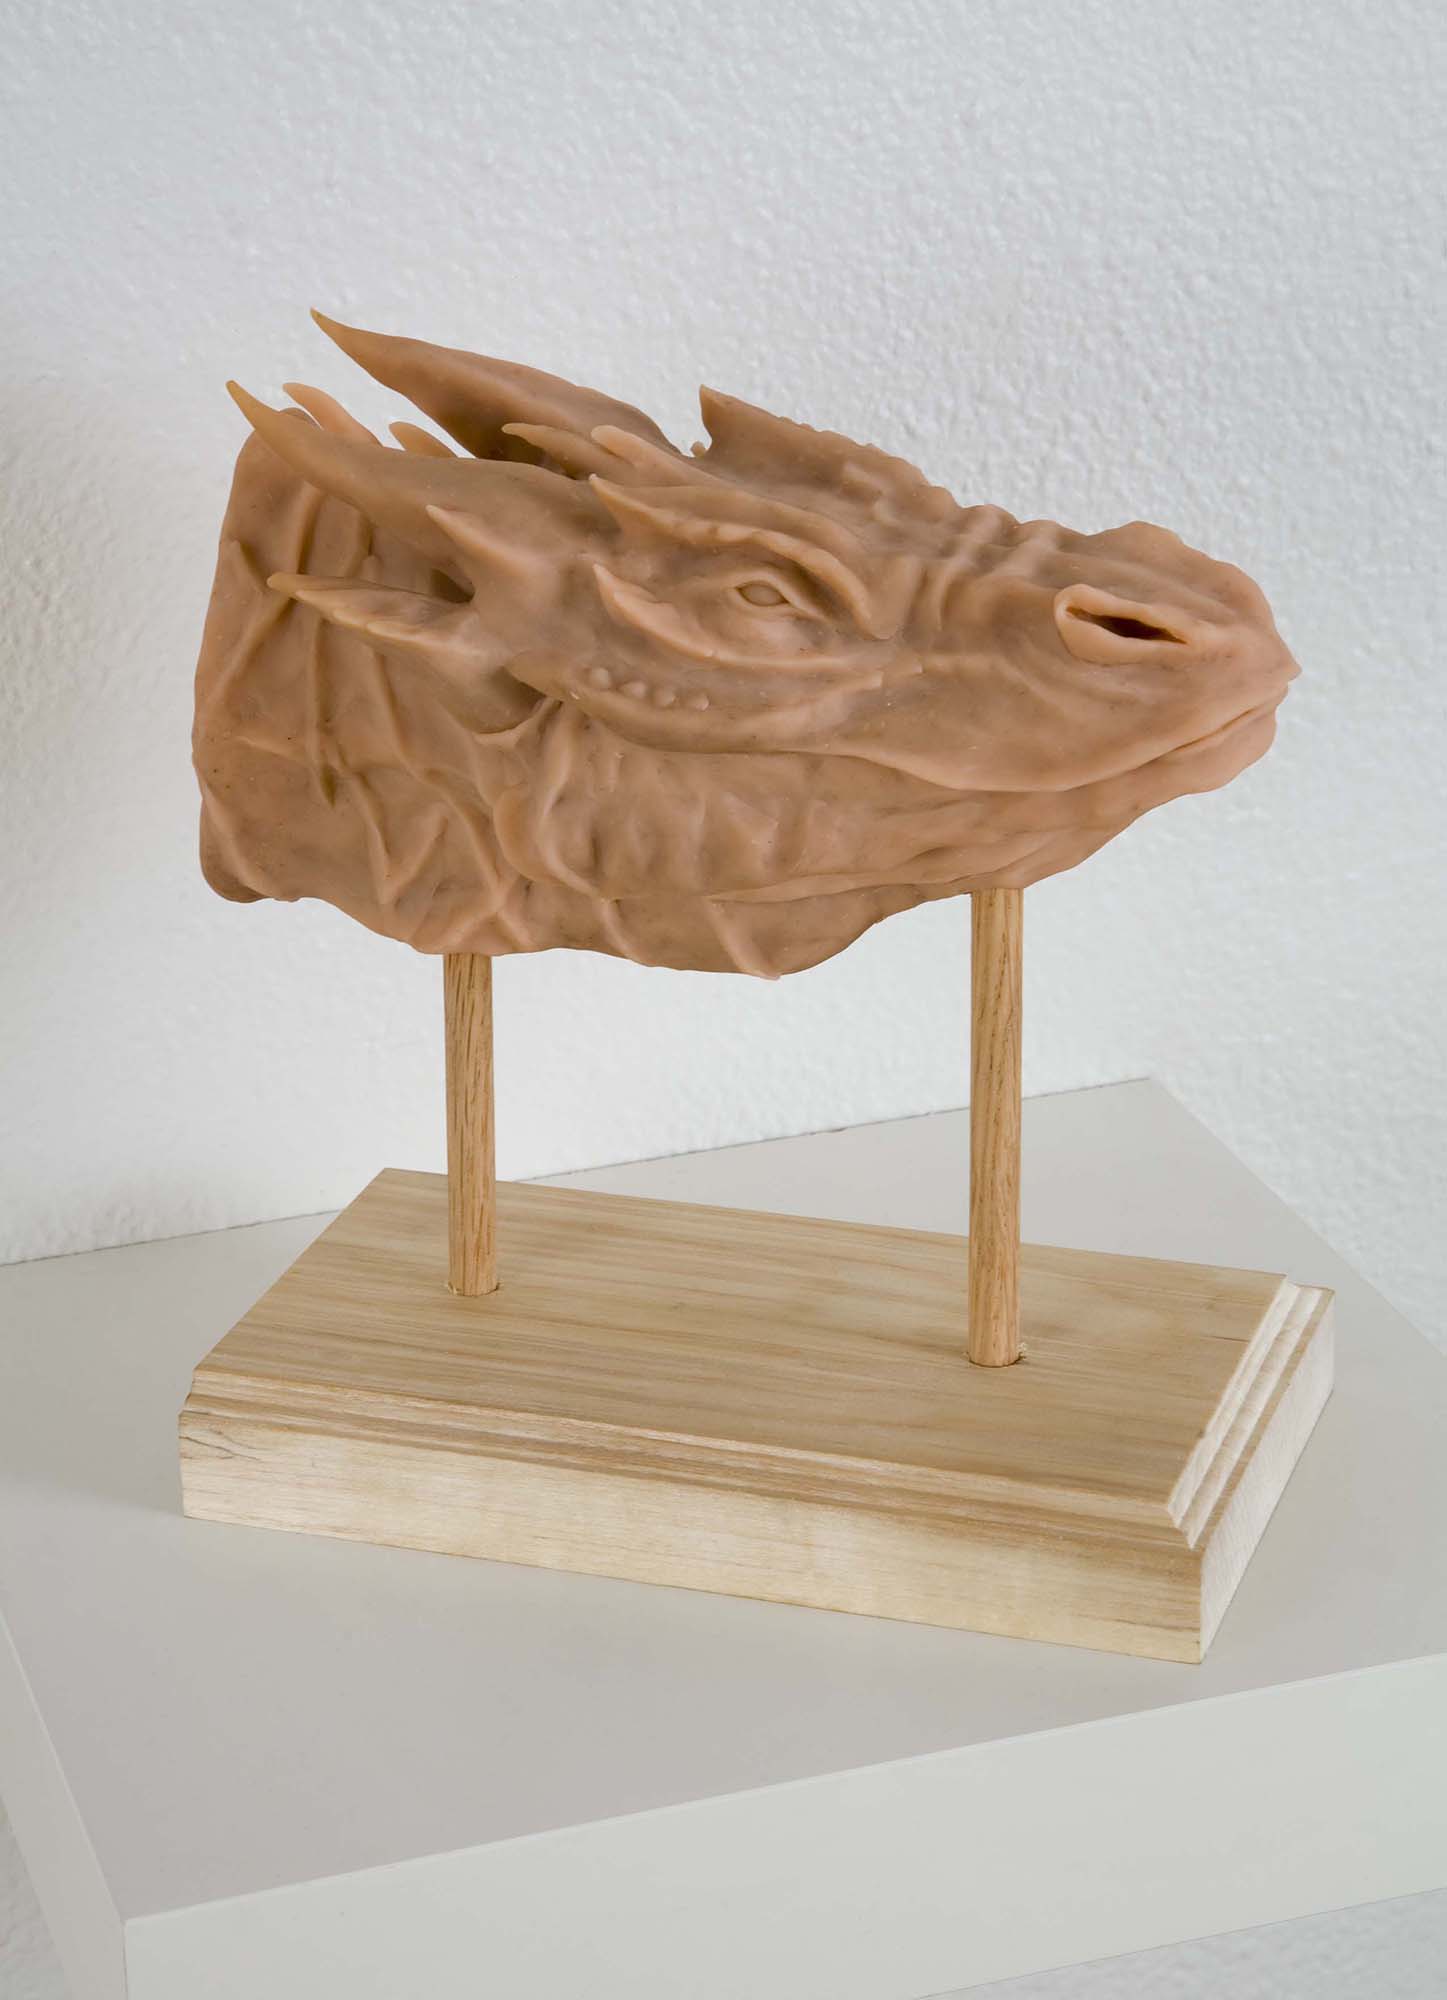 Model of a dragon head